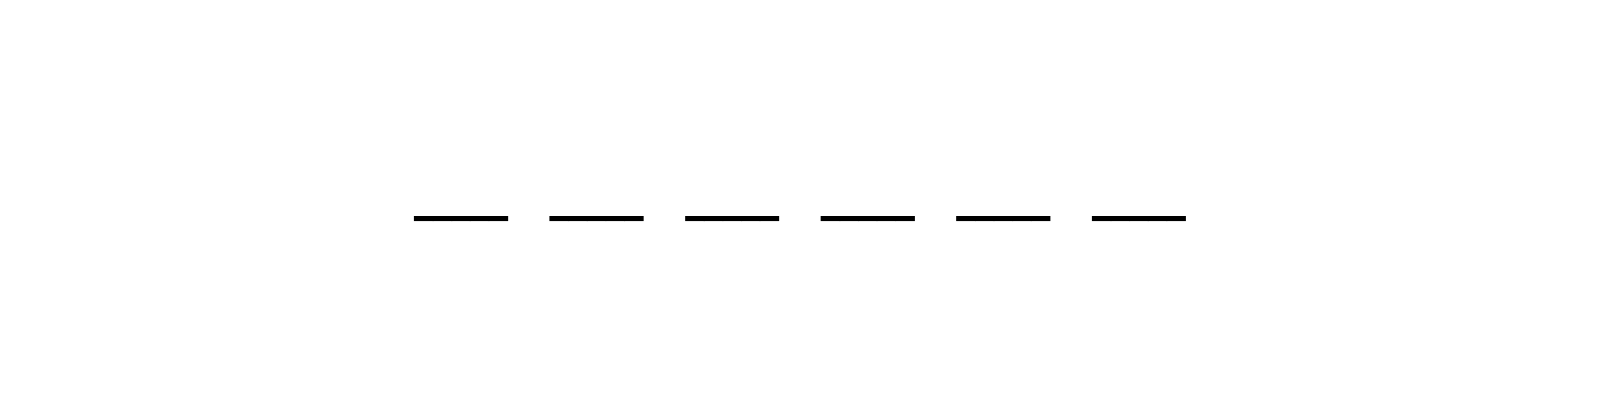 series of lines